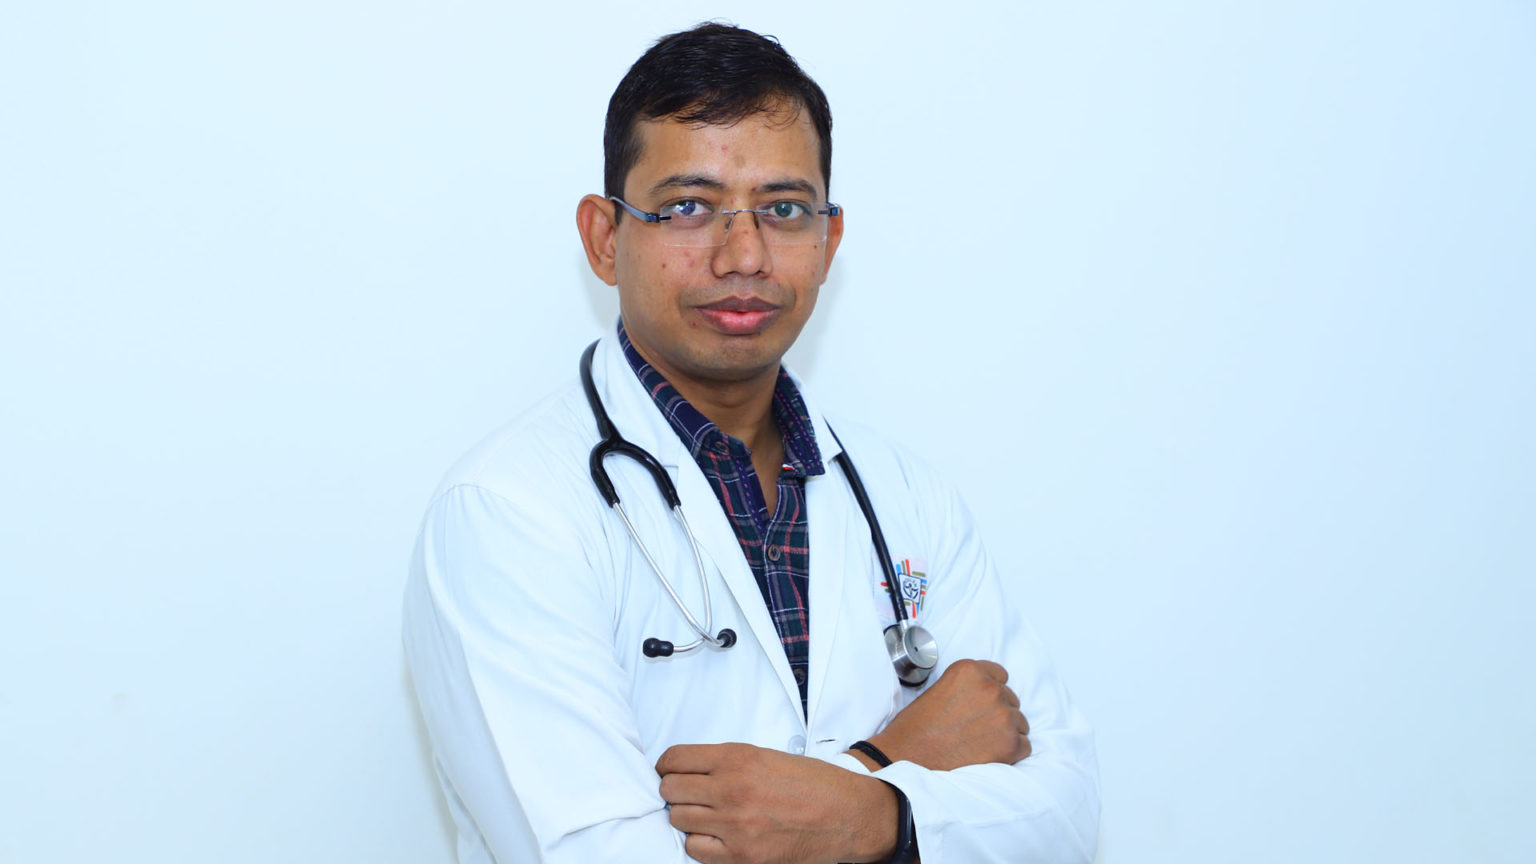 Dr. Pradeep Jain from Govt Dental College Subhash Nagar ,Jaipur, Rajasthan, 302016, India 25 years experience in Speciality General Physician | Internal Medicine | Kayawell